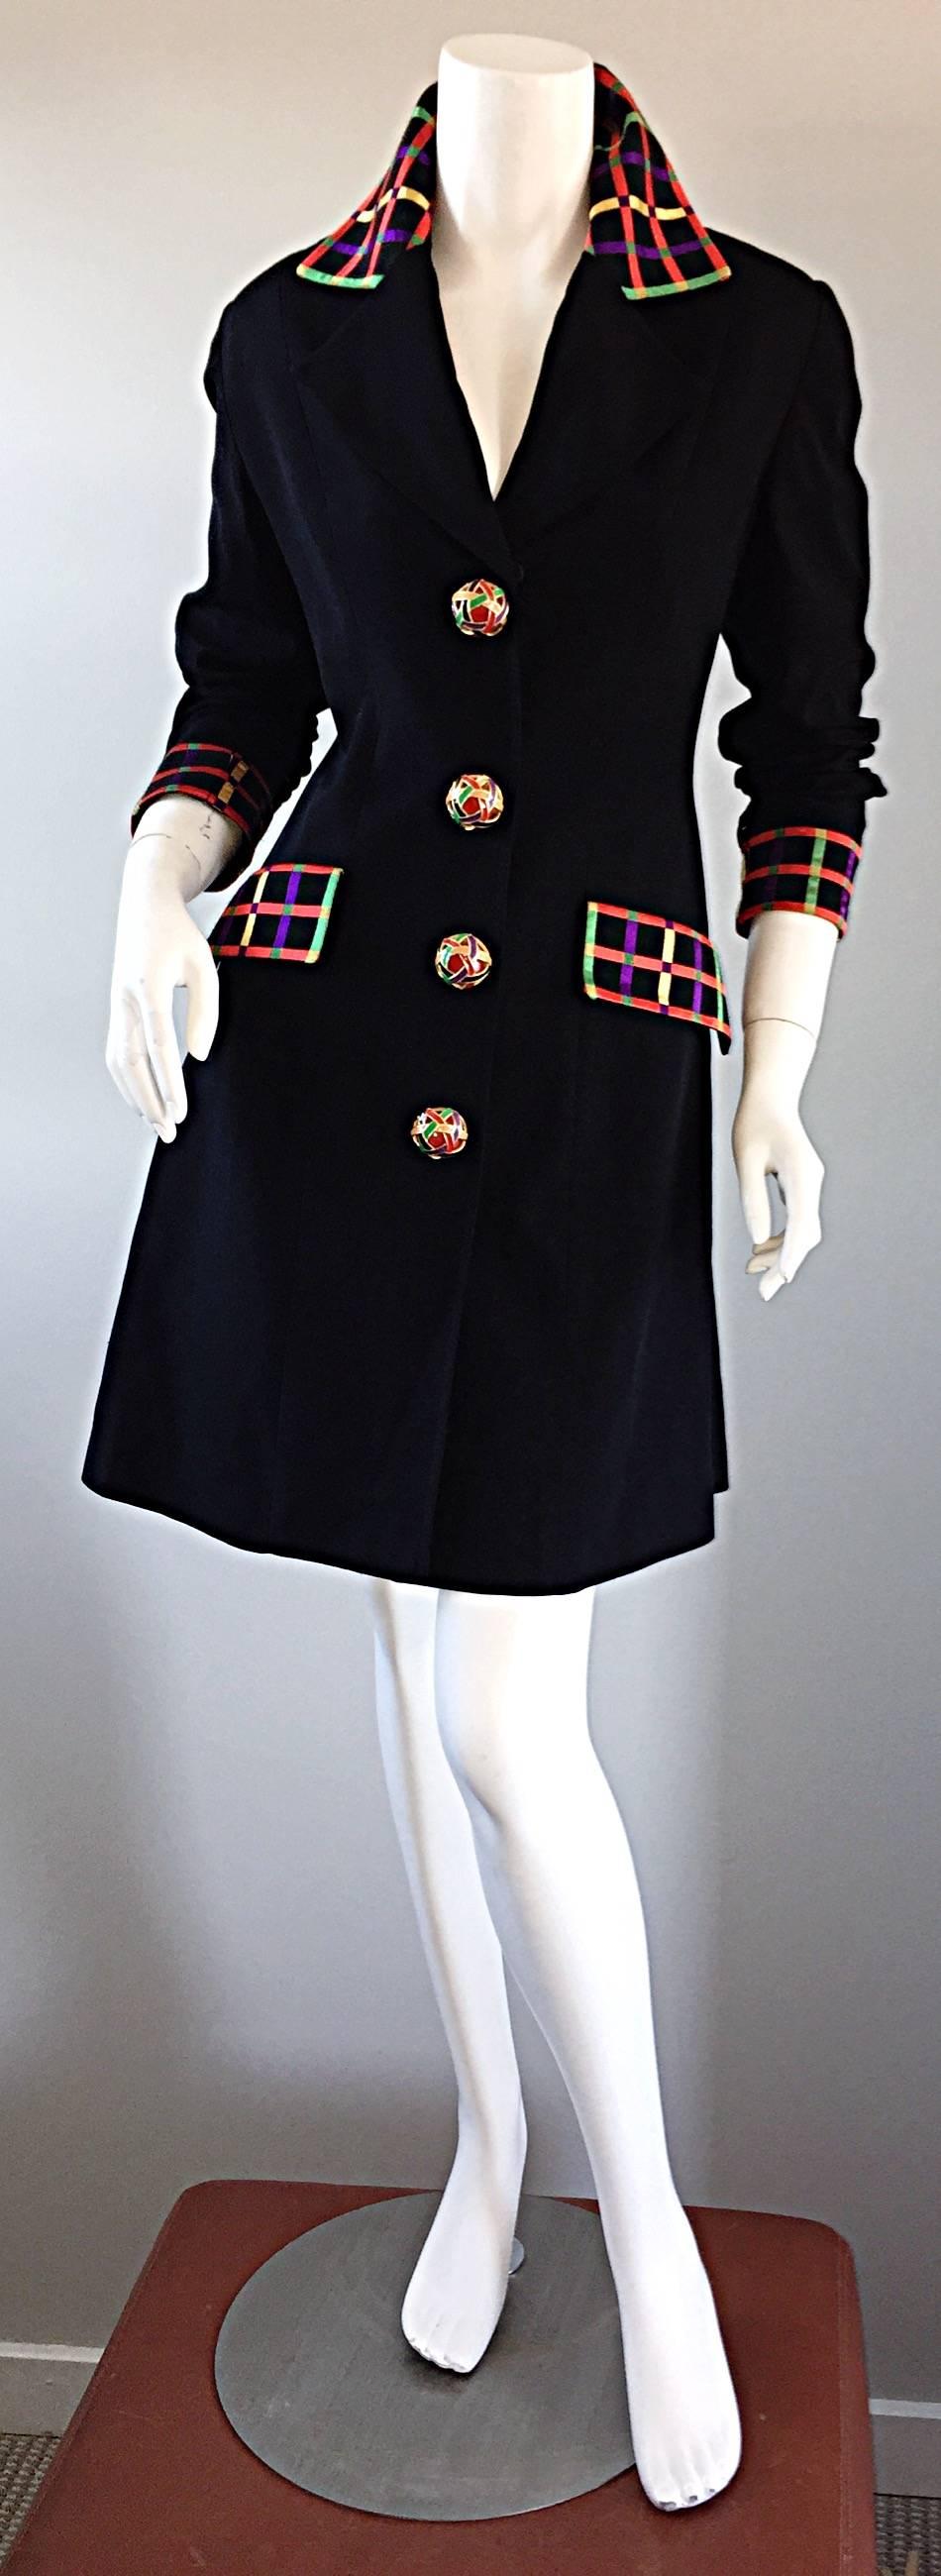 Vintage Kathryn Dianos Black Jacket Dress w/ Plaid Details + Dome Buttons 2